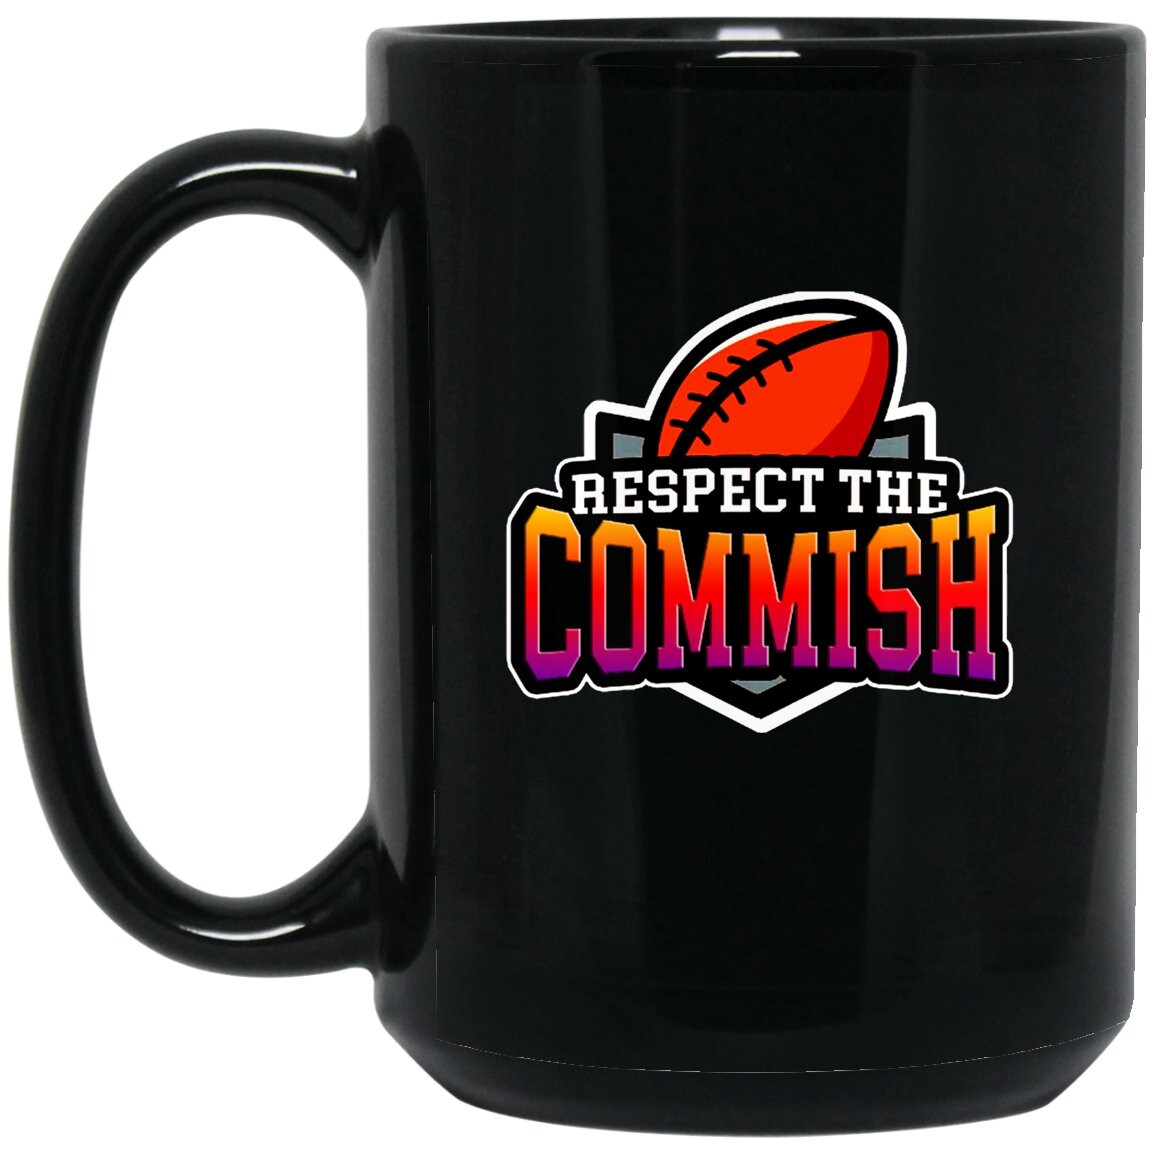 Respect the Commish,  15 oz. Black Mug, Fantasy Football Commissioner Accent Mug, fantasy football queen, fantasy football King - plusminusco.com